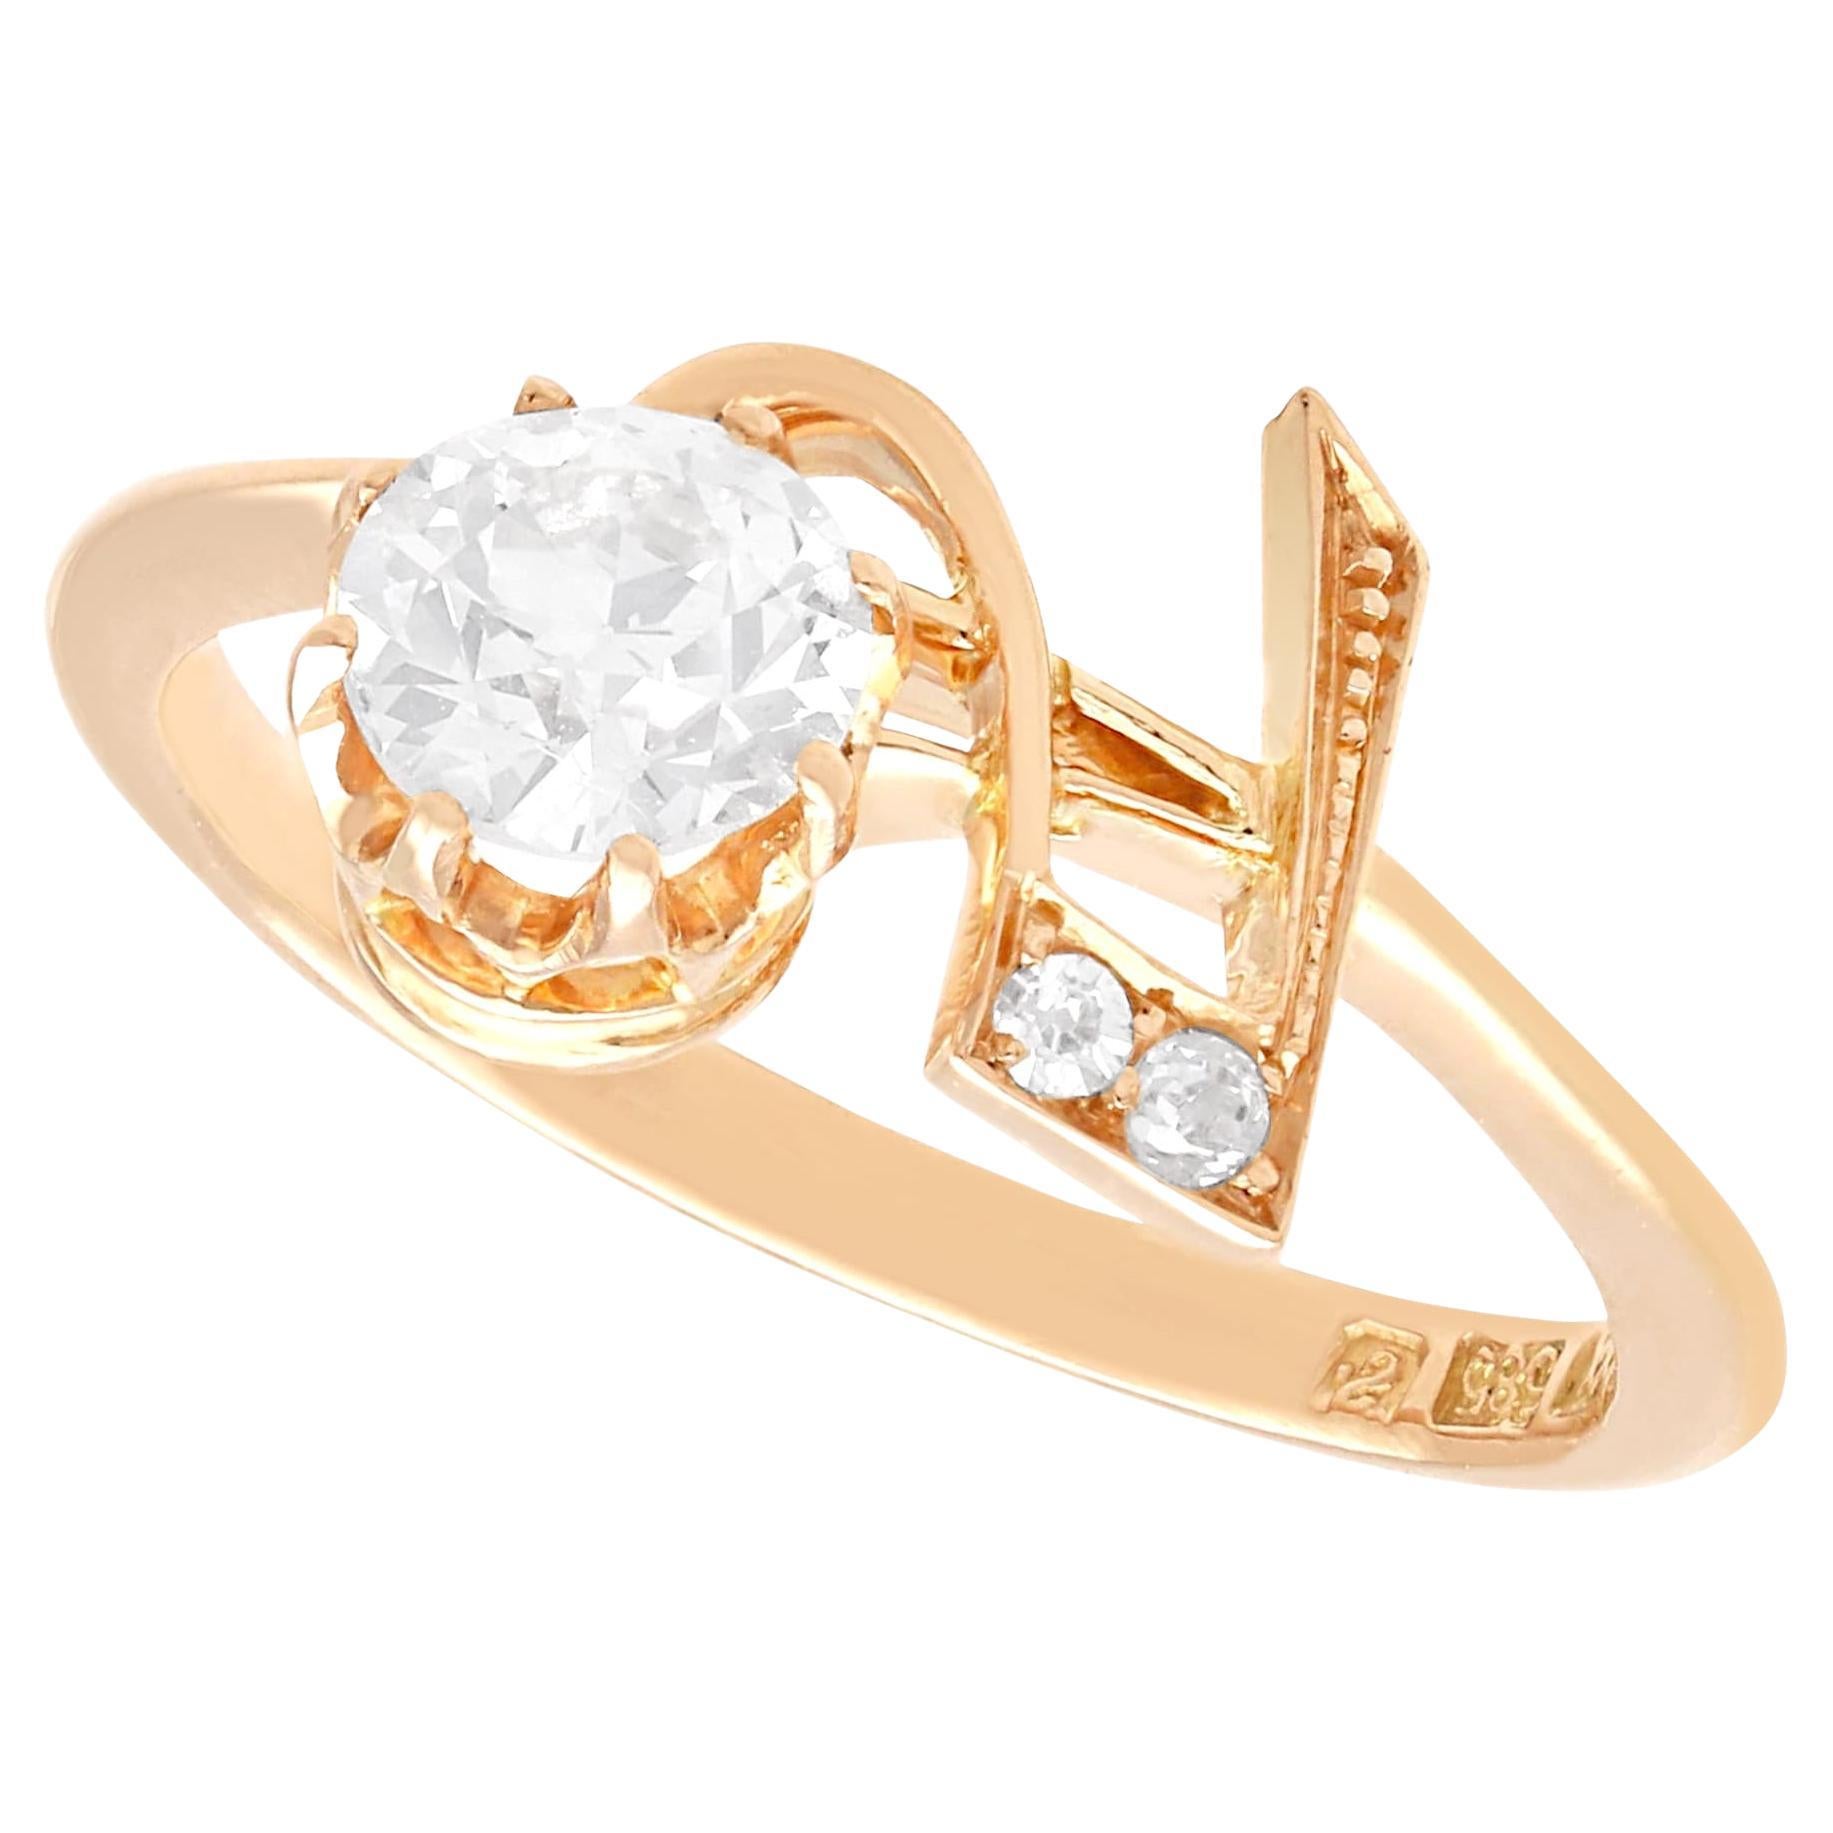 Antique 0.64 Carat Diamond and 14 Karat Rose Gold Dress Ring